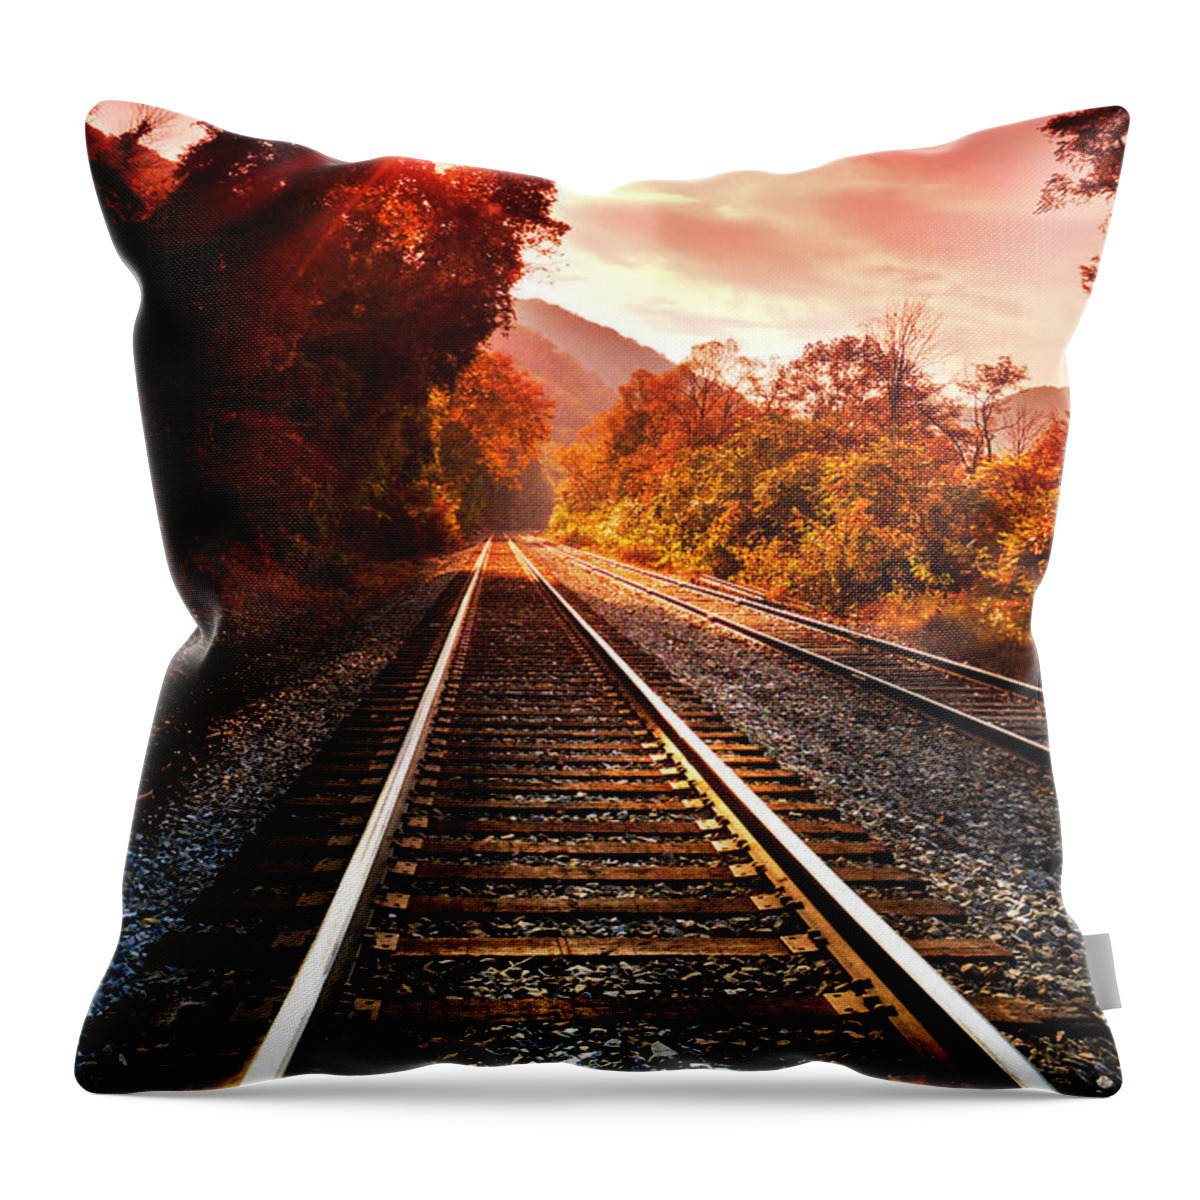 Train Throw Pillow featuring the photograph The New Dawn by Lisa Lambert-Shank